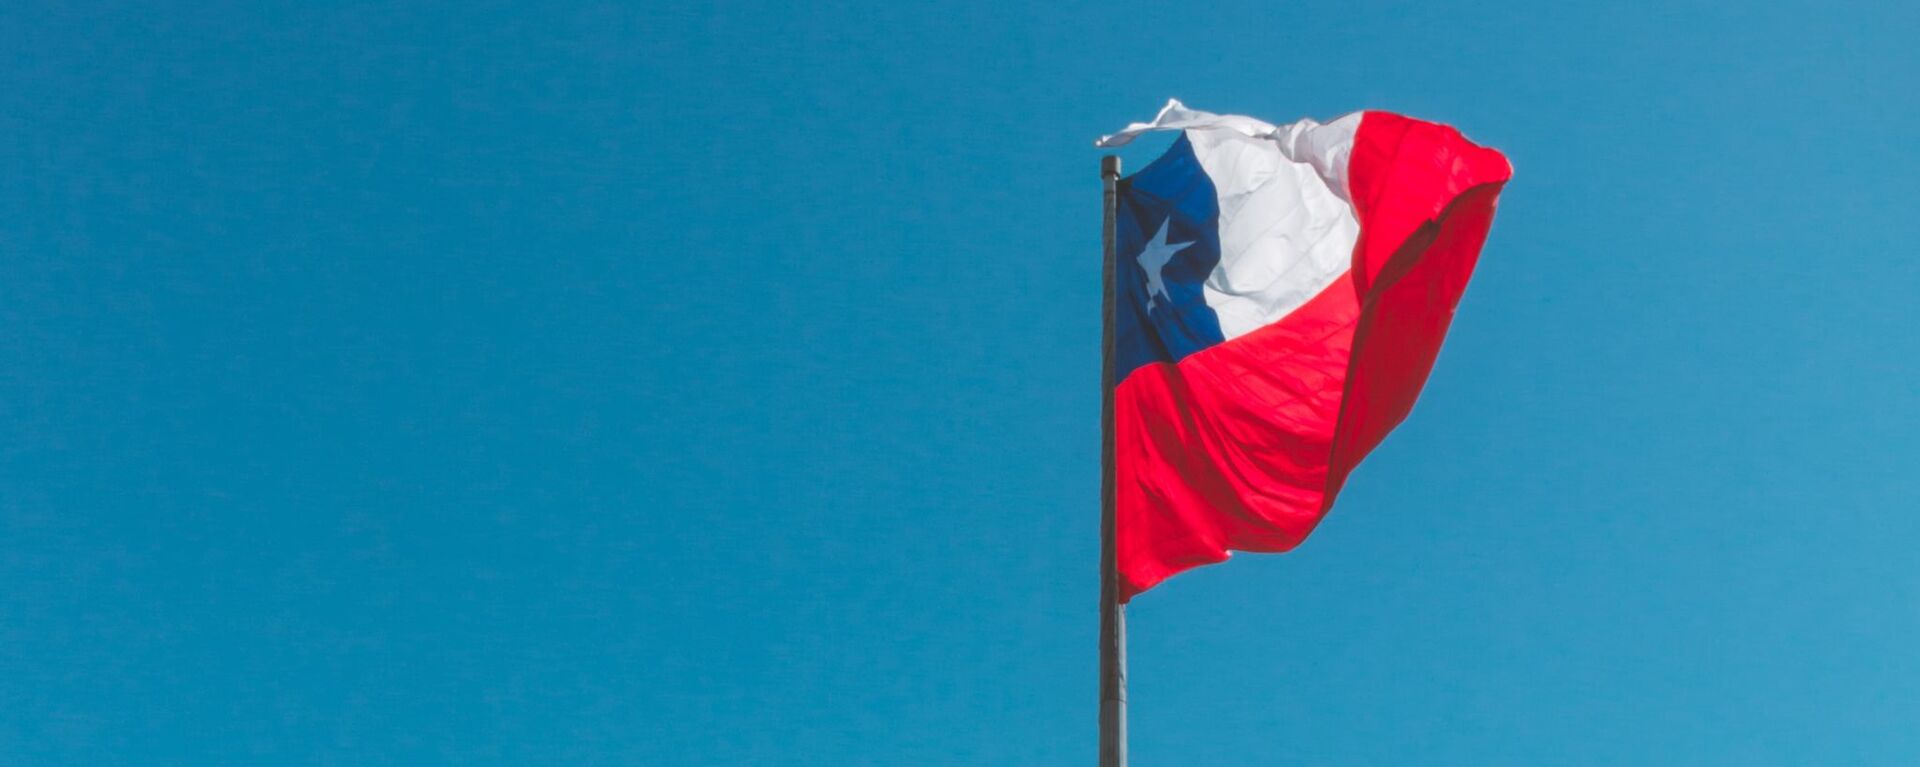 La bandera de Chile - Sputnik Mundo, 1920, 03.03.2021